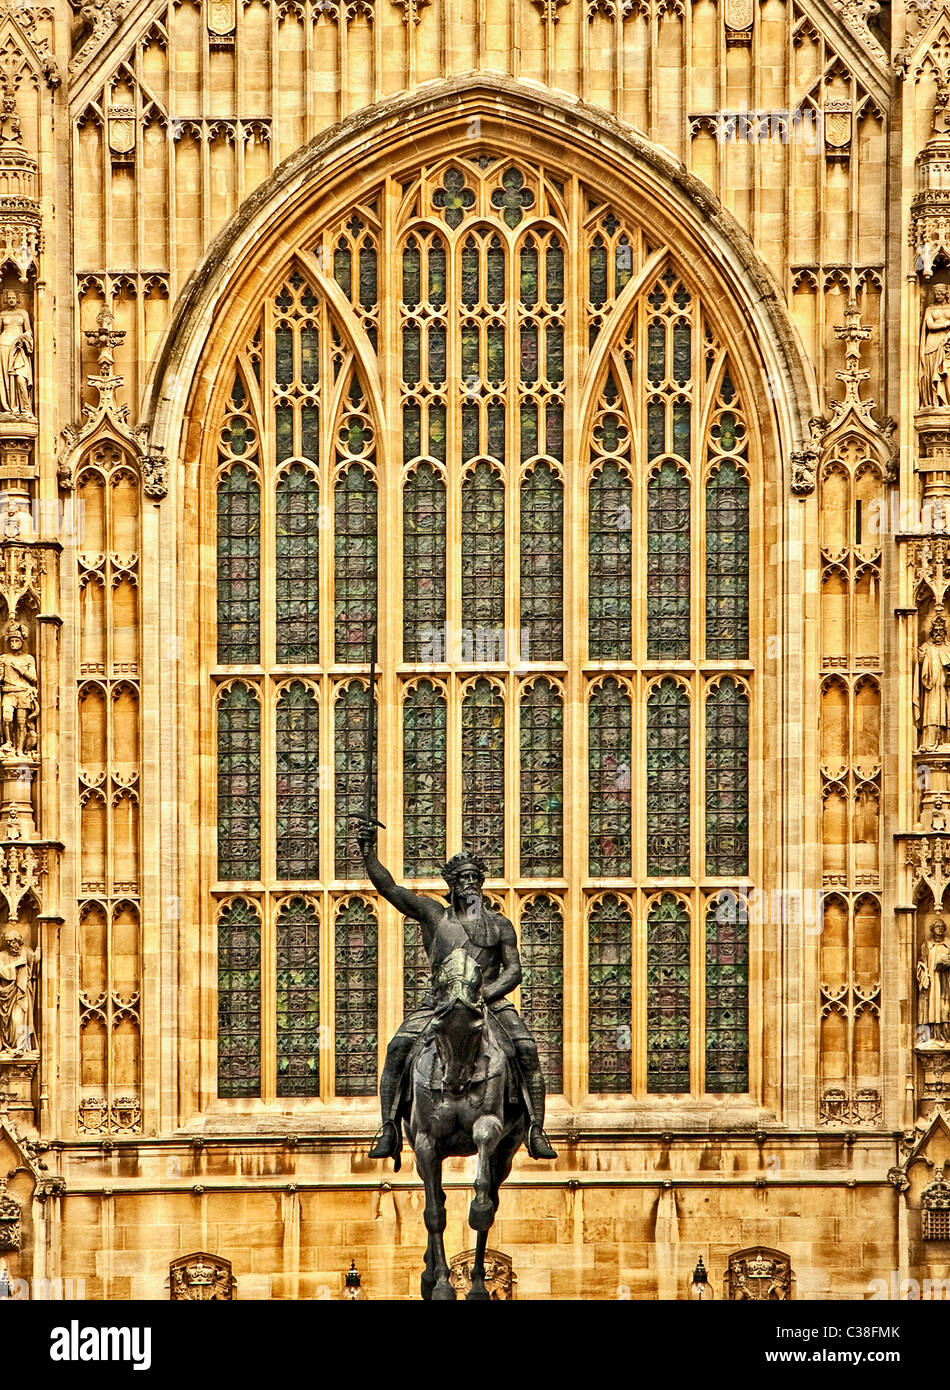 Un monumento di Riccardo Cuor di leone in Westminster; Denkmal von Richard Löwenherz vor dem Parlament in Westminster Foto Stock